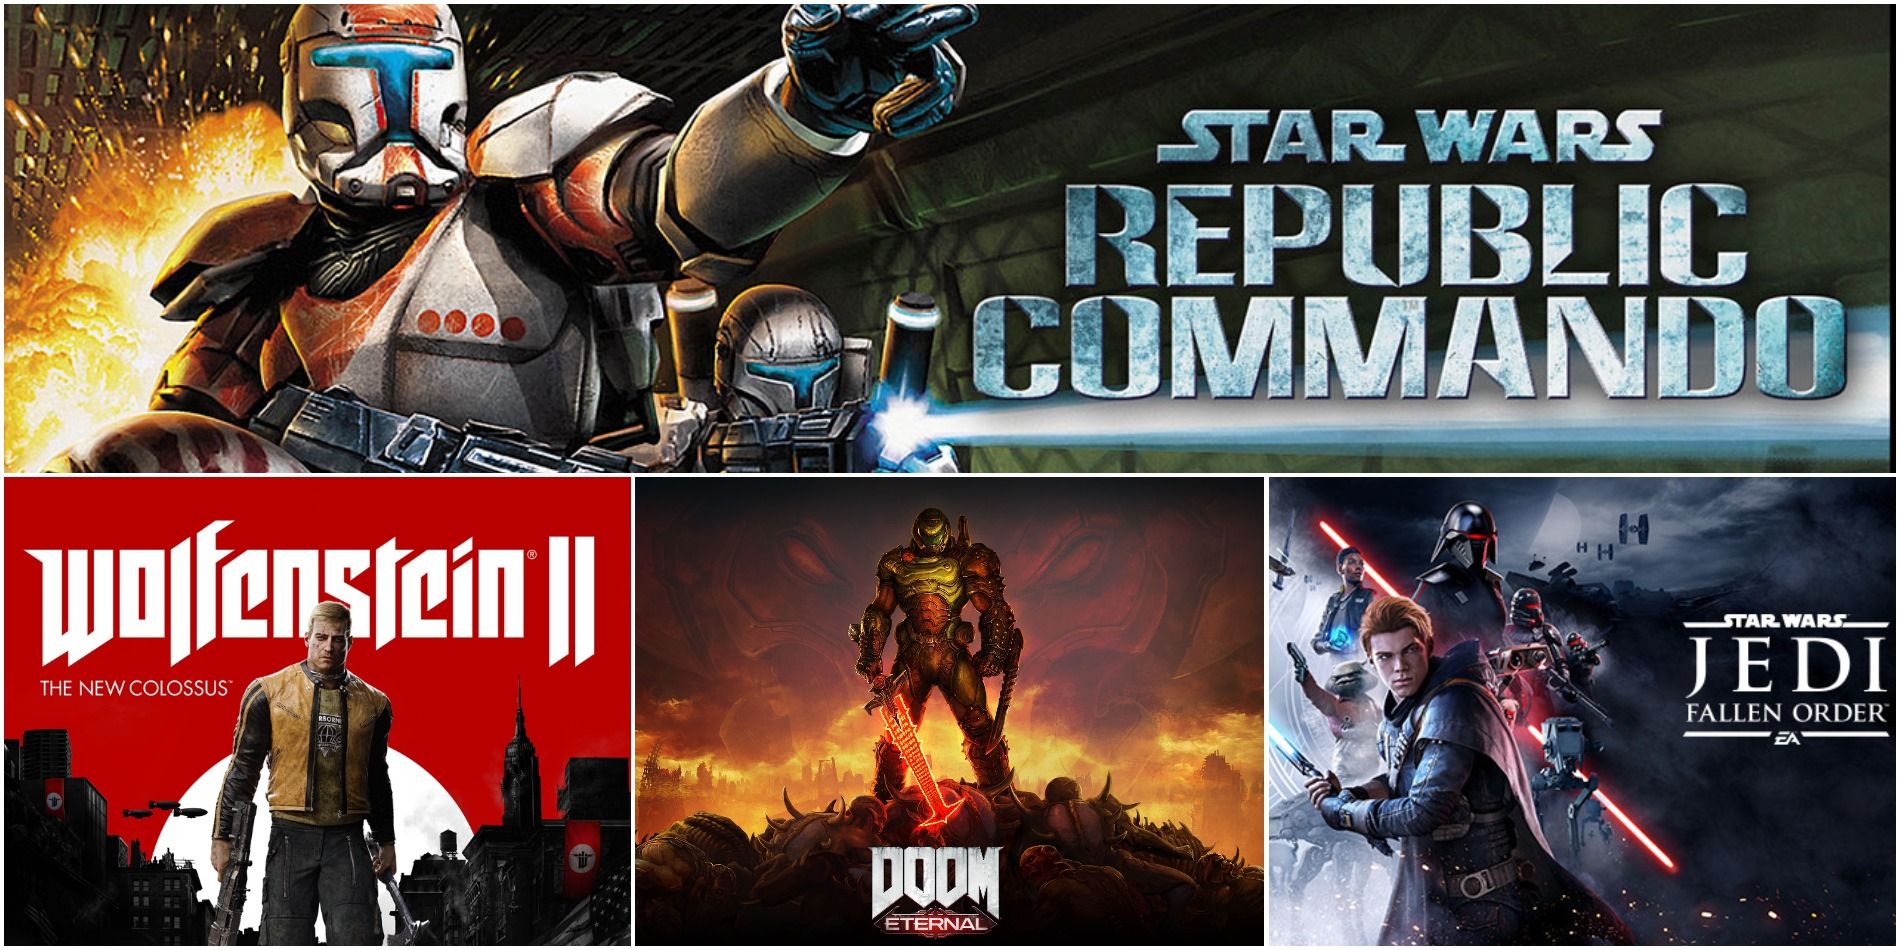 Star Wars: Republic Commando, Wolfenstein II: The New Colossus and Star Wars Jedi: Fallen Order